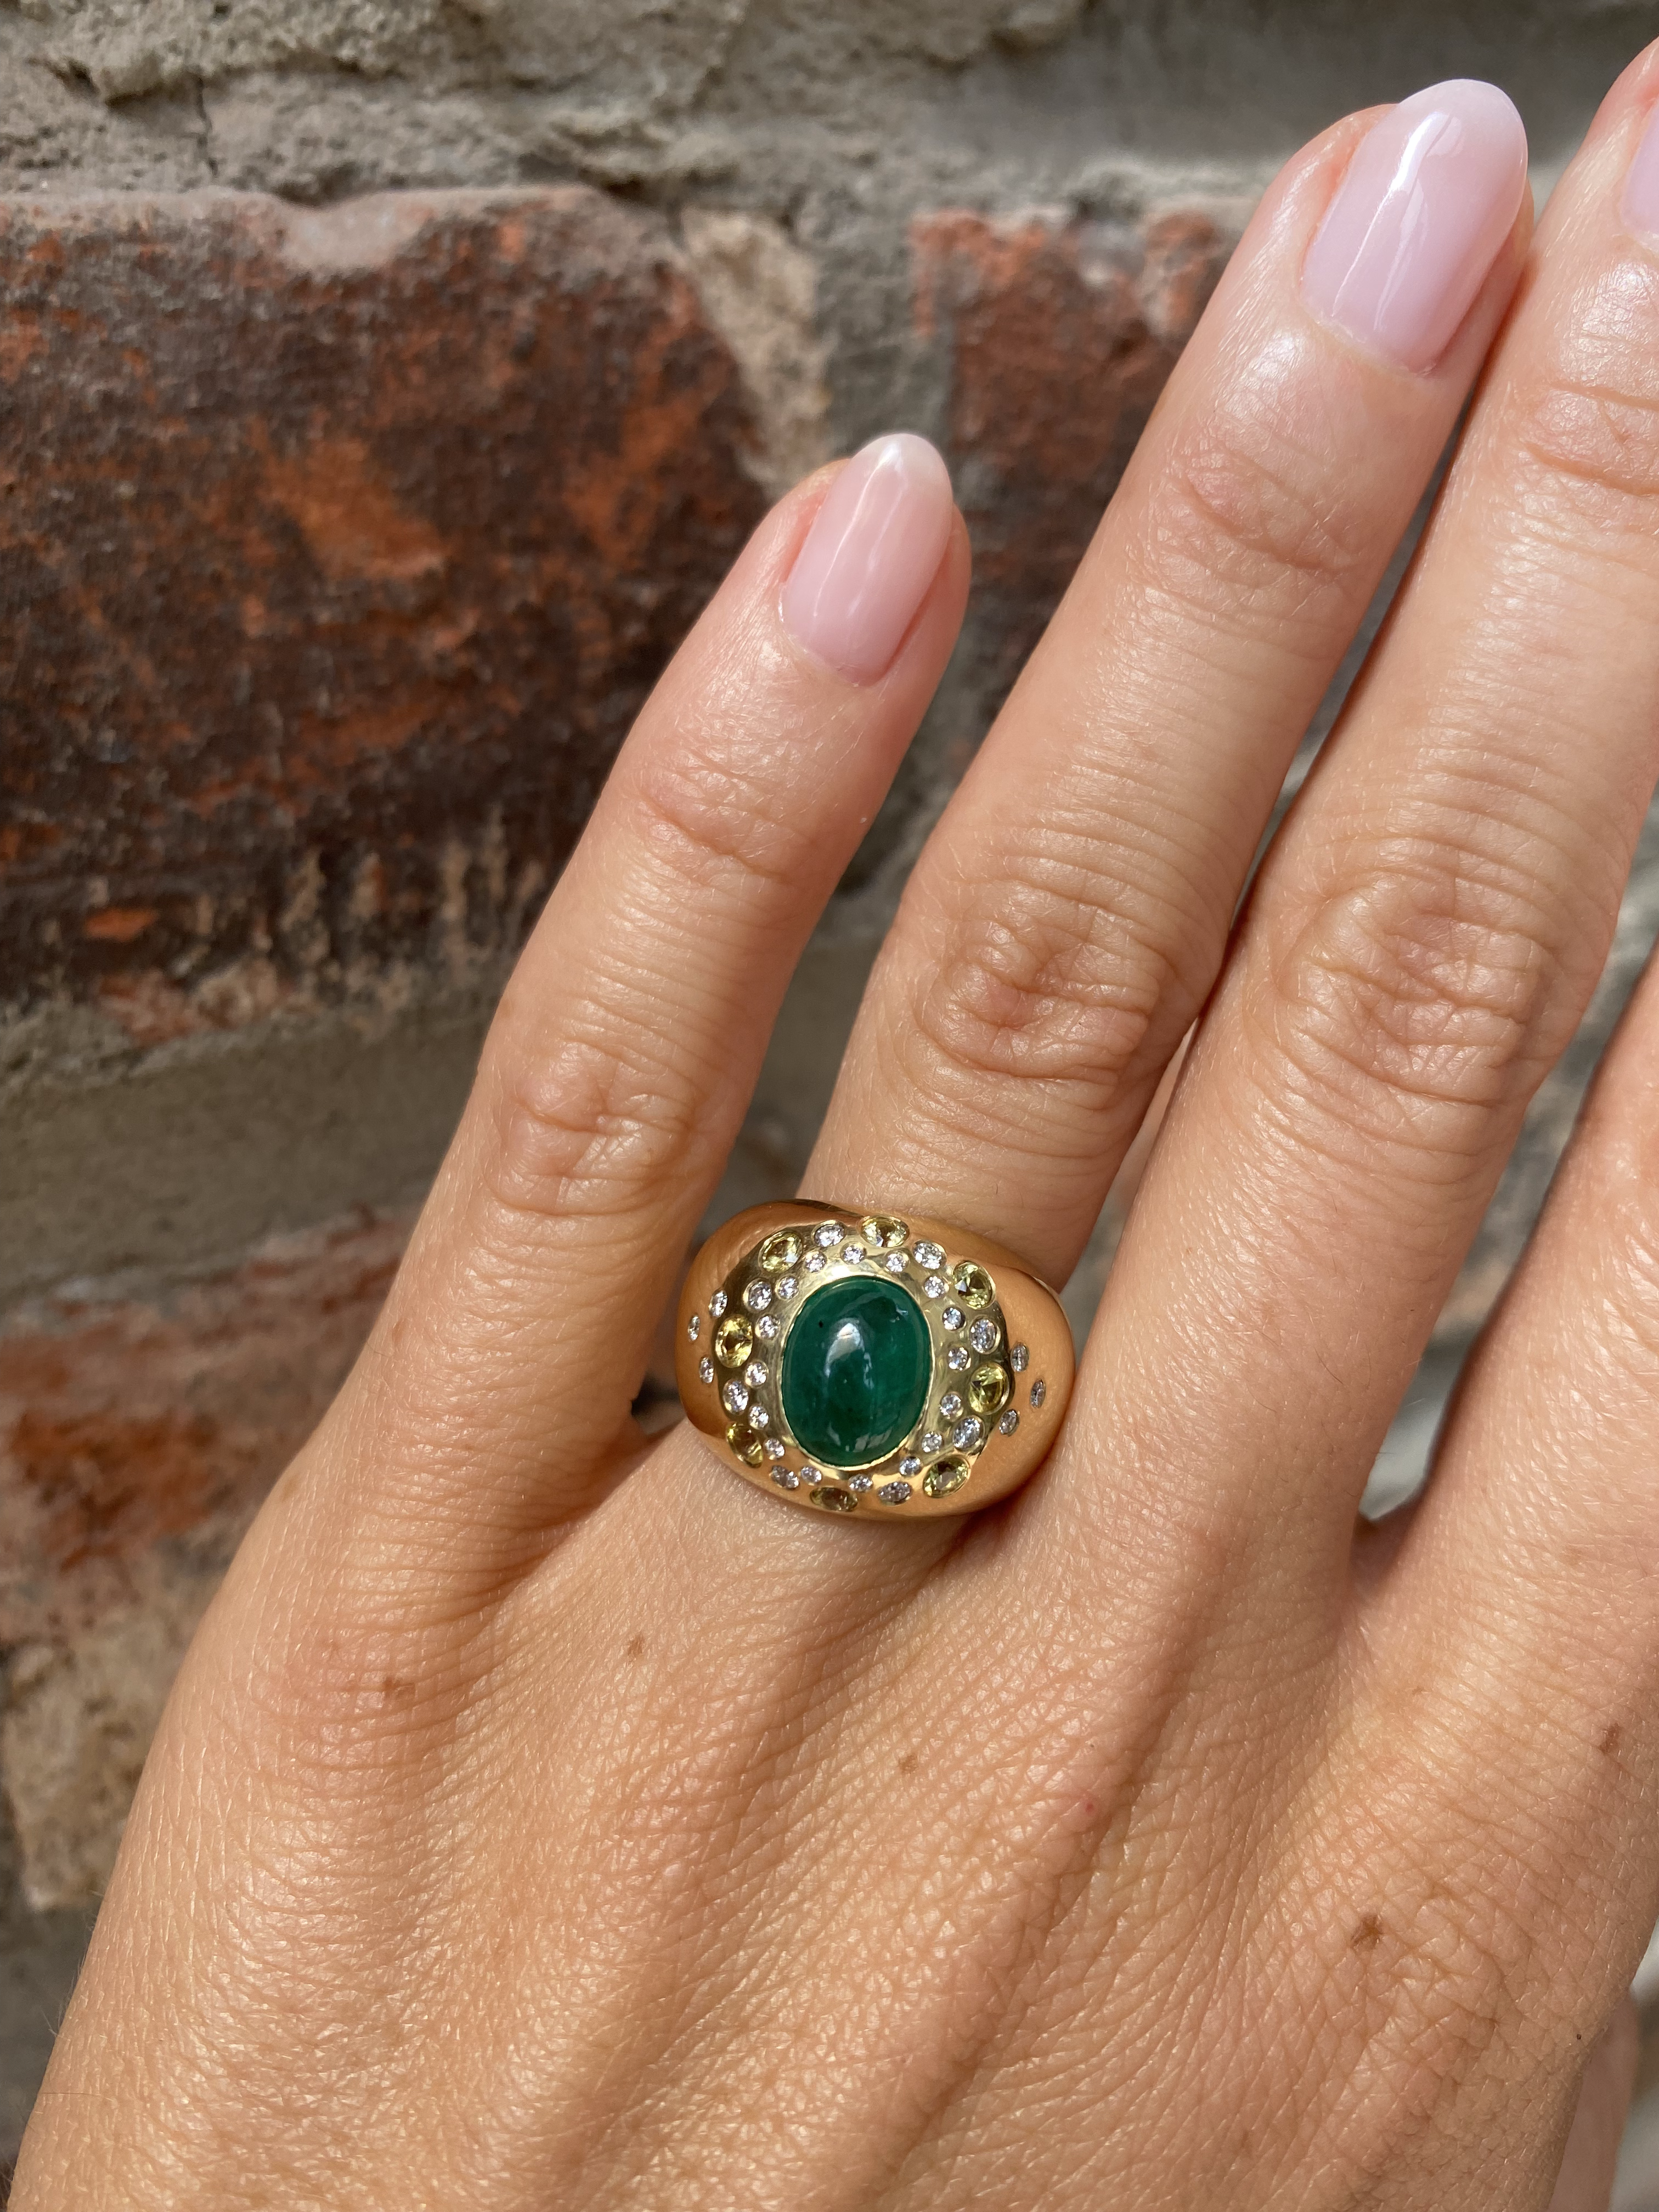 Buy Retrend Design® Gold Emerald Ring For Men & Women Panna Stone Original  Certified Sone Ki Anguthi Beautiful Emerald Cut Stone Ring पन्ना रत्न रिंग  Top AAA+++ Quality Pukhraj Gold Ring सोने